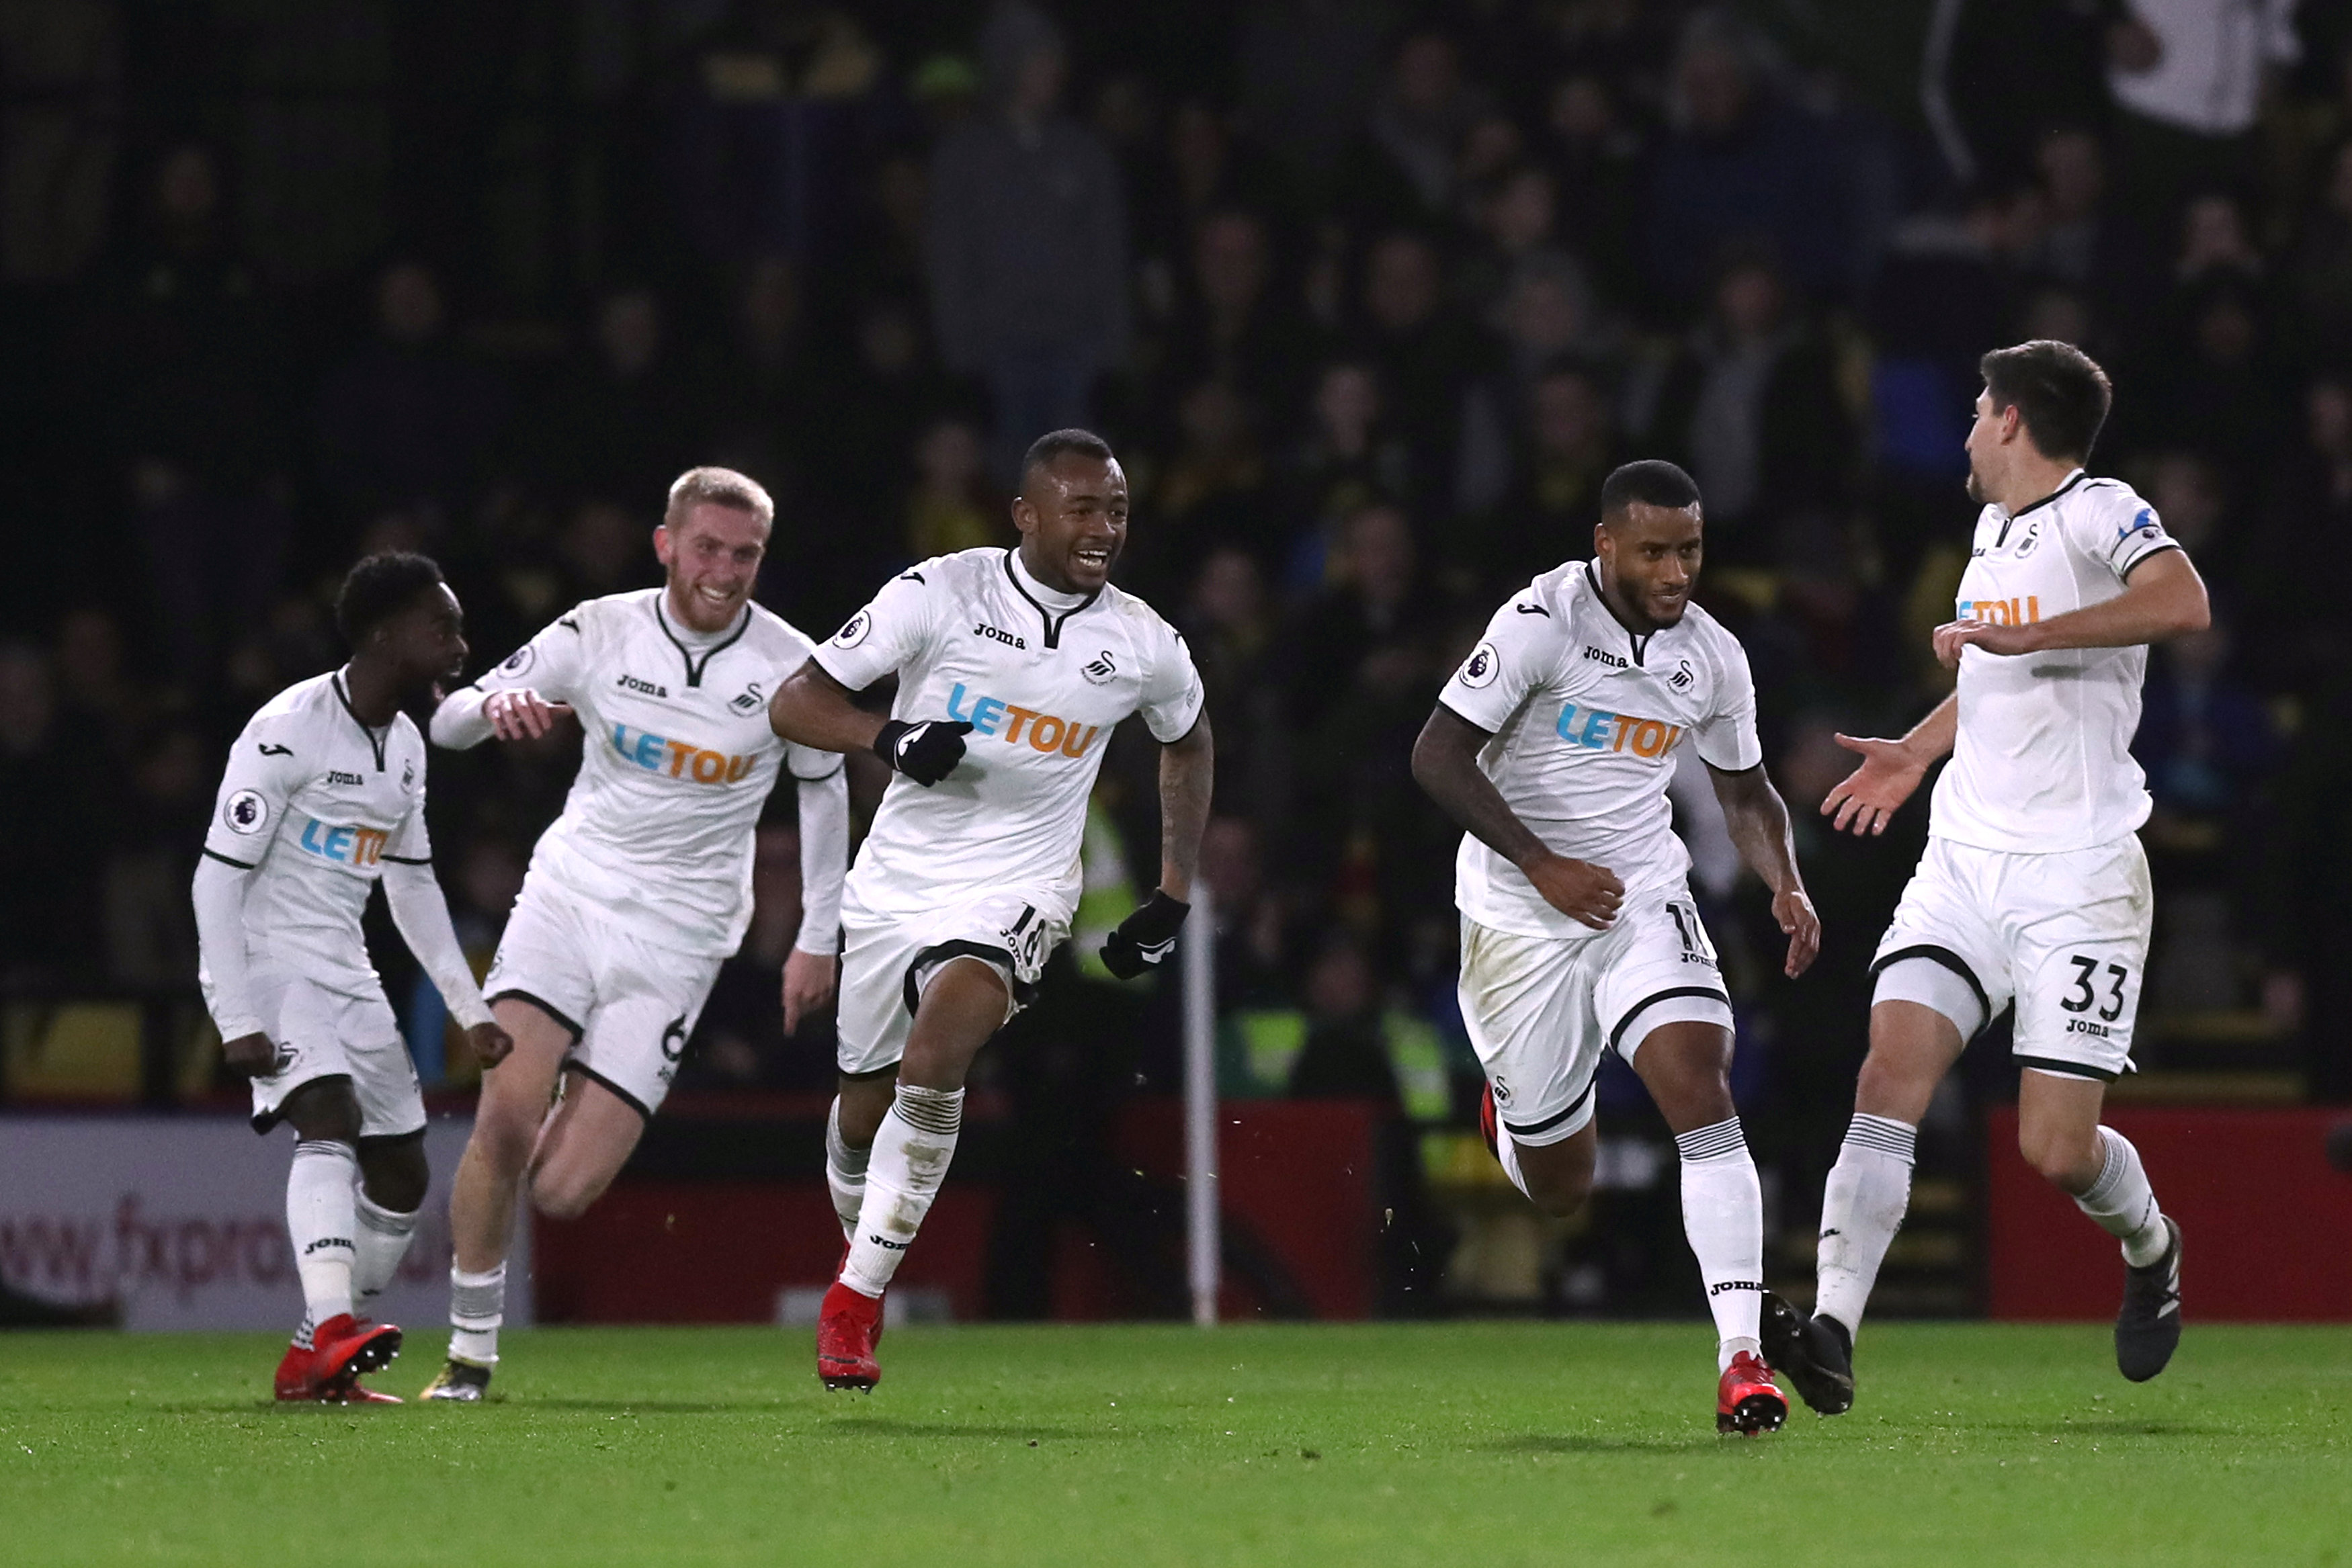 Football: Winning debut for Carvalhal as Swansea beat Watford